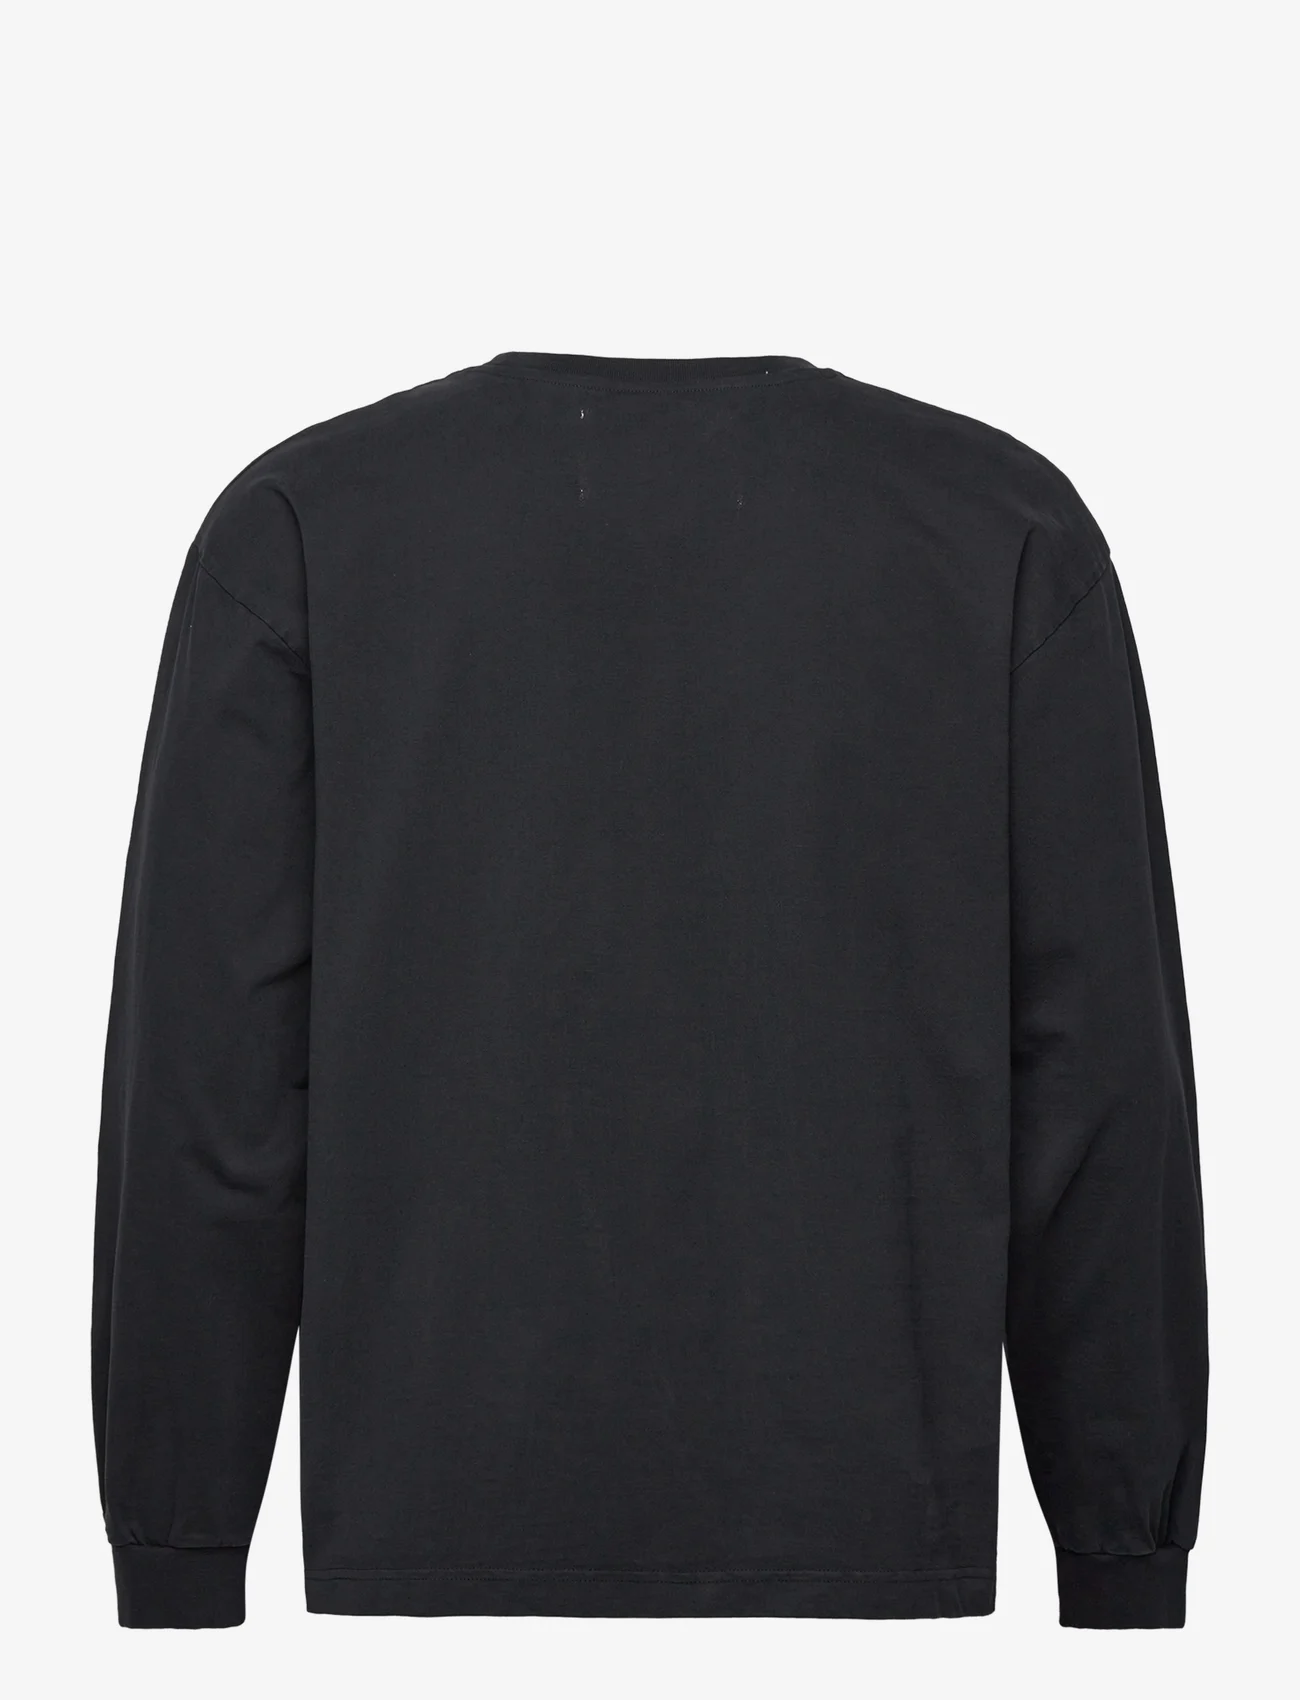 Garment Project - Heavy L/S Tee - Black - langermede t-skjorter - black - 1